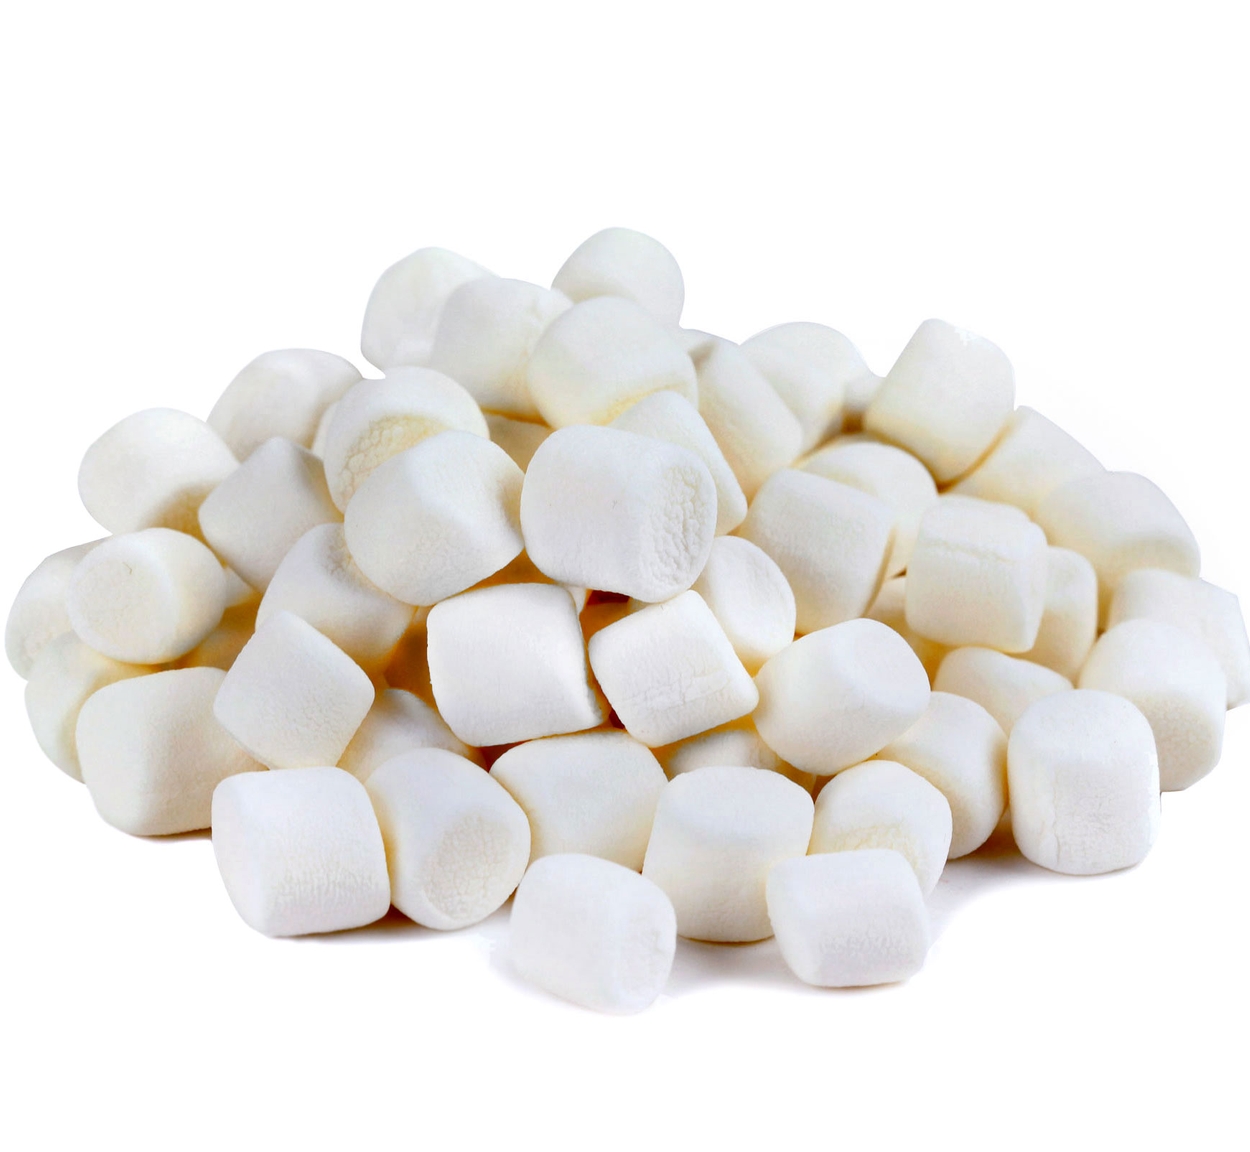 Minis marshmallow 250 g - chamallow